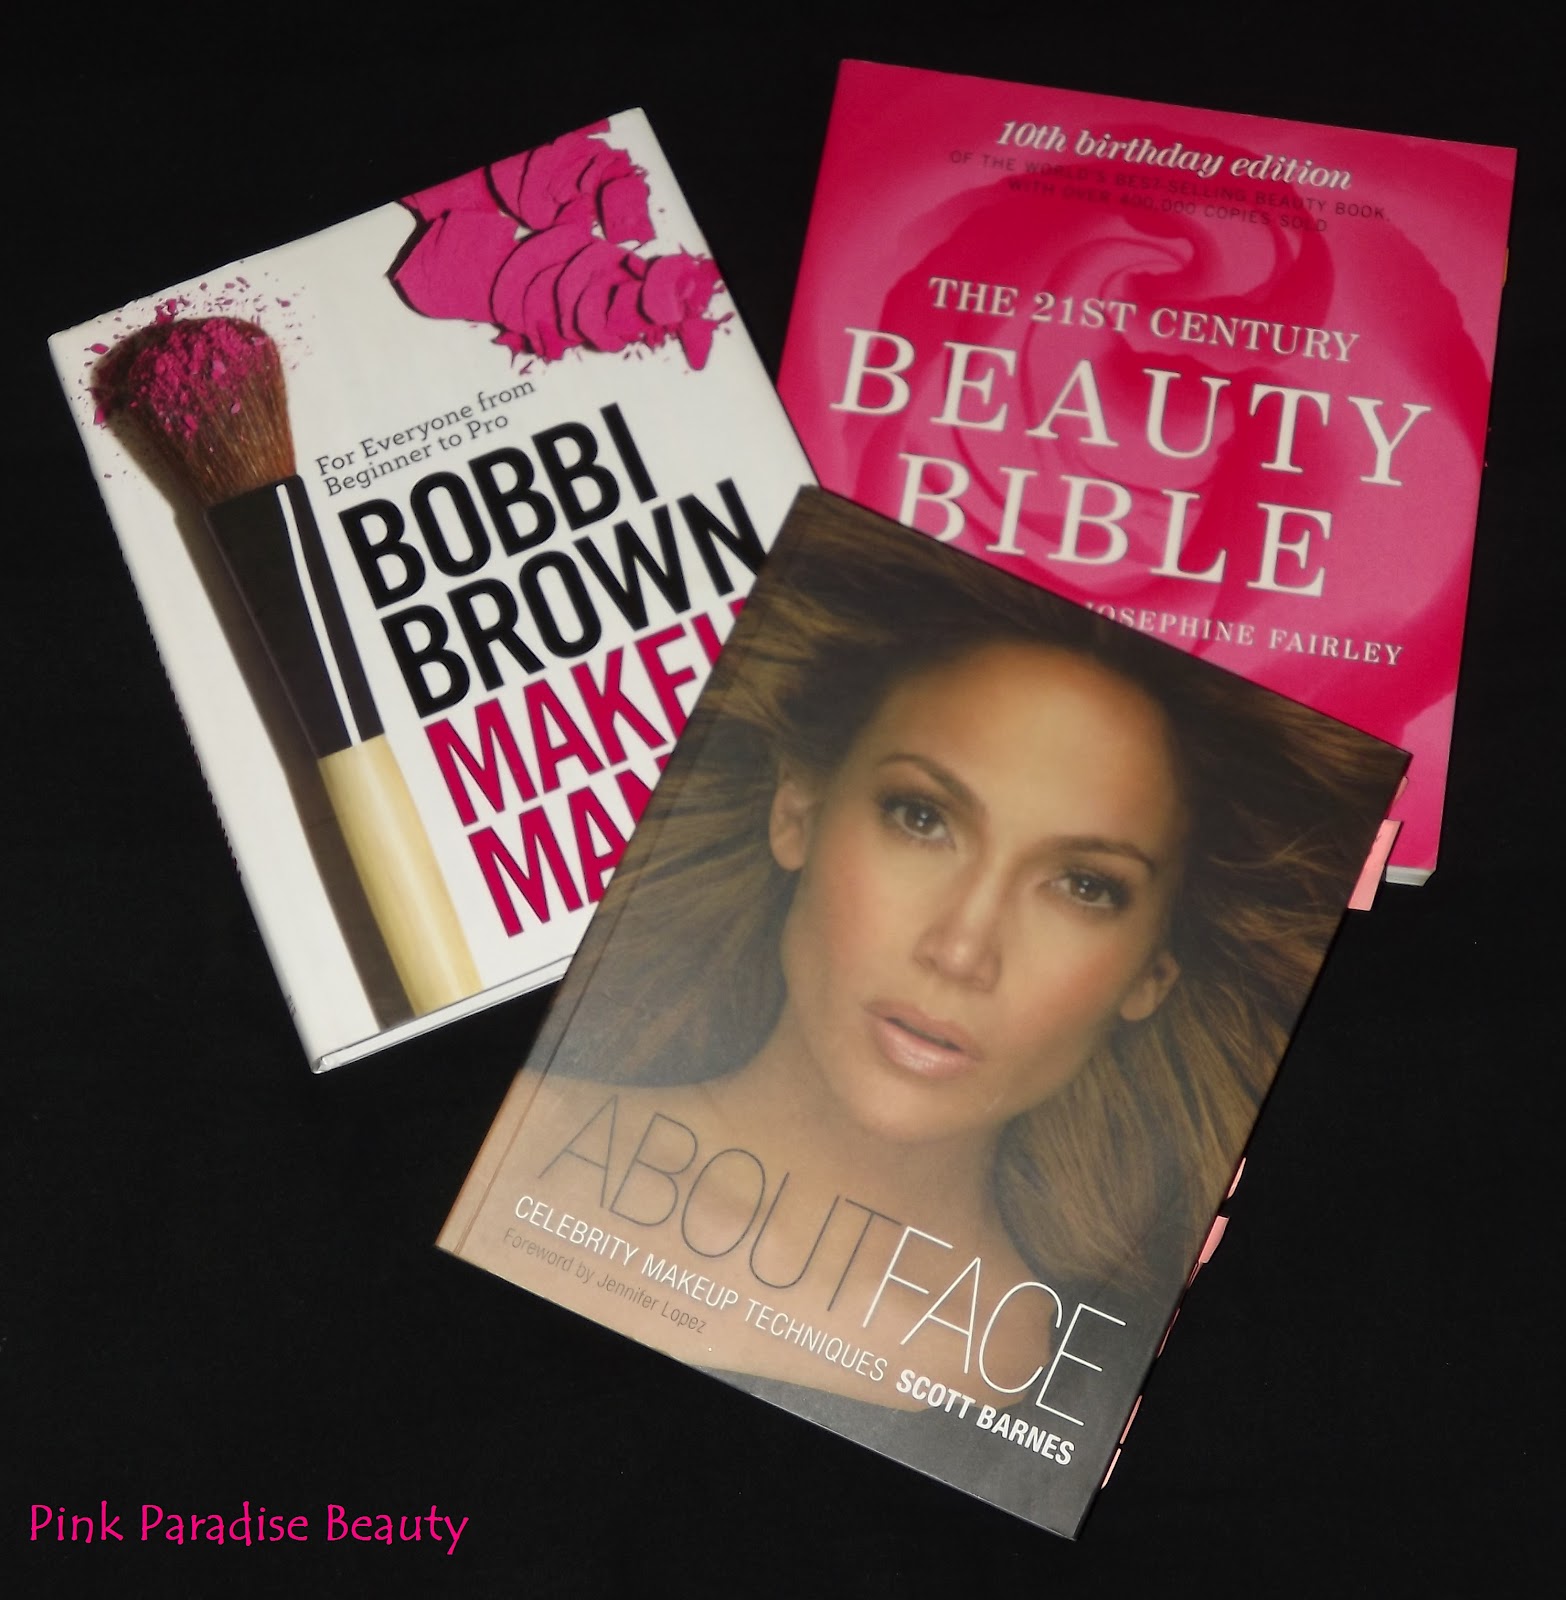 My Top 3 Beauty Books - Bobbi Brown, Scott Barnes, Beauty Bible